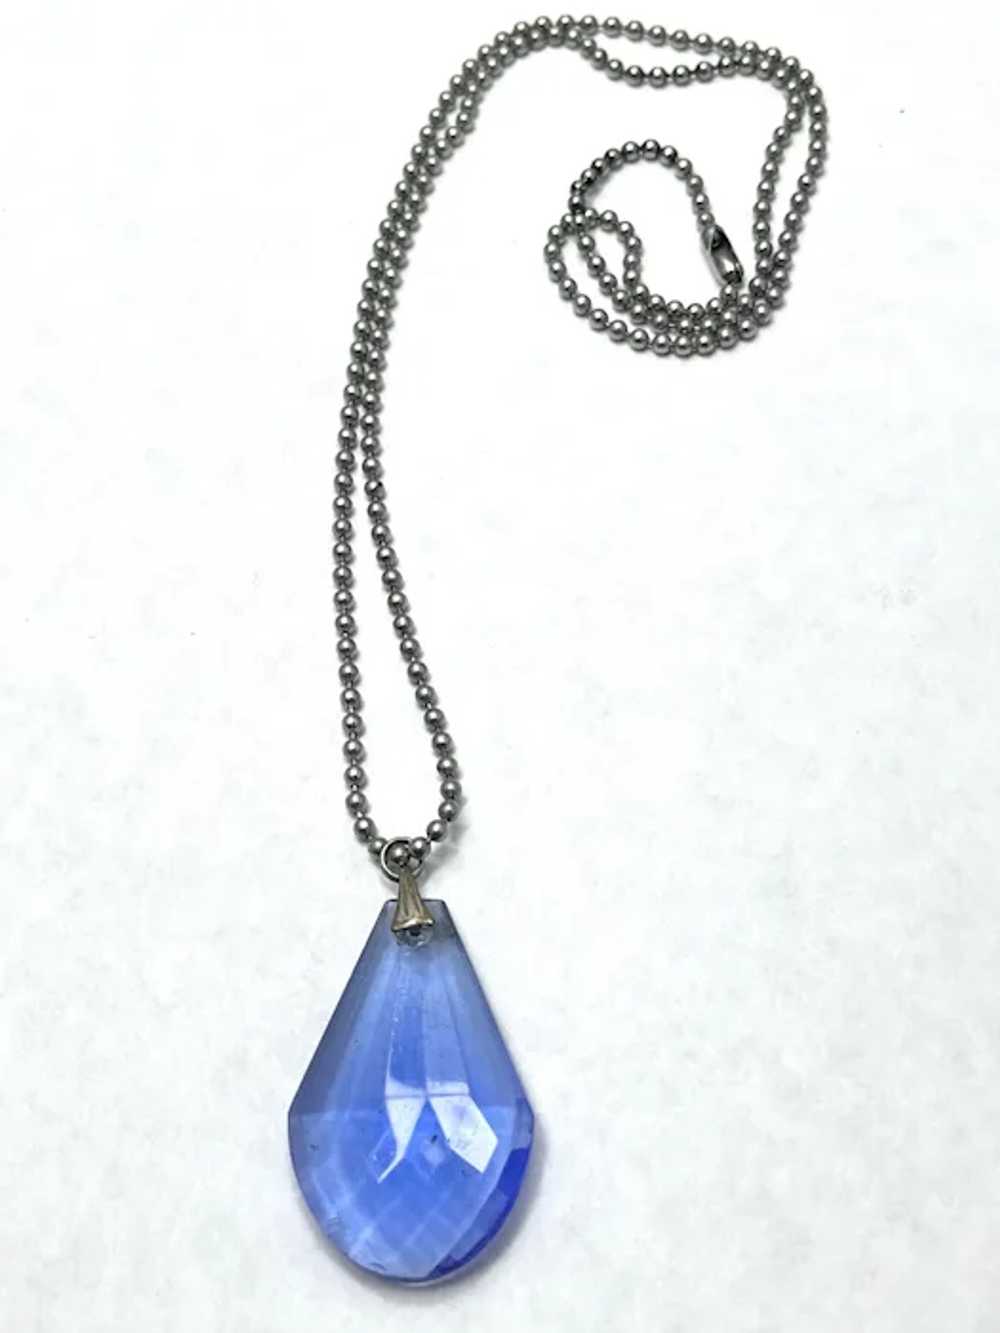 Vintage Blue Glass Faceted Pendant Necklace - image 2